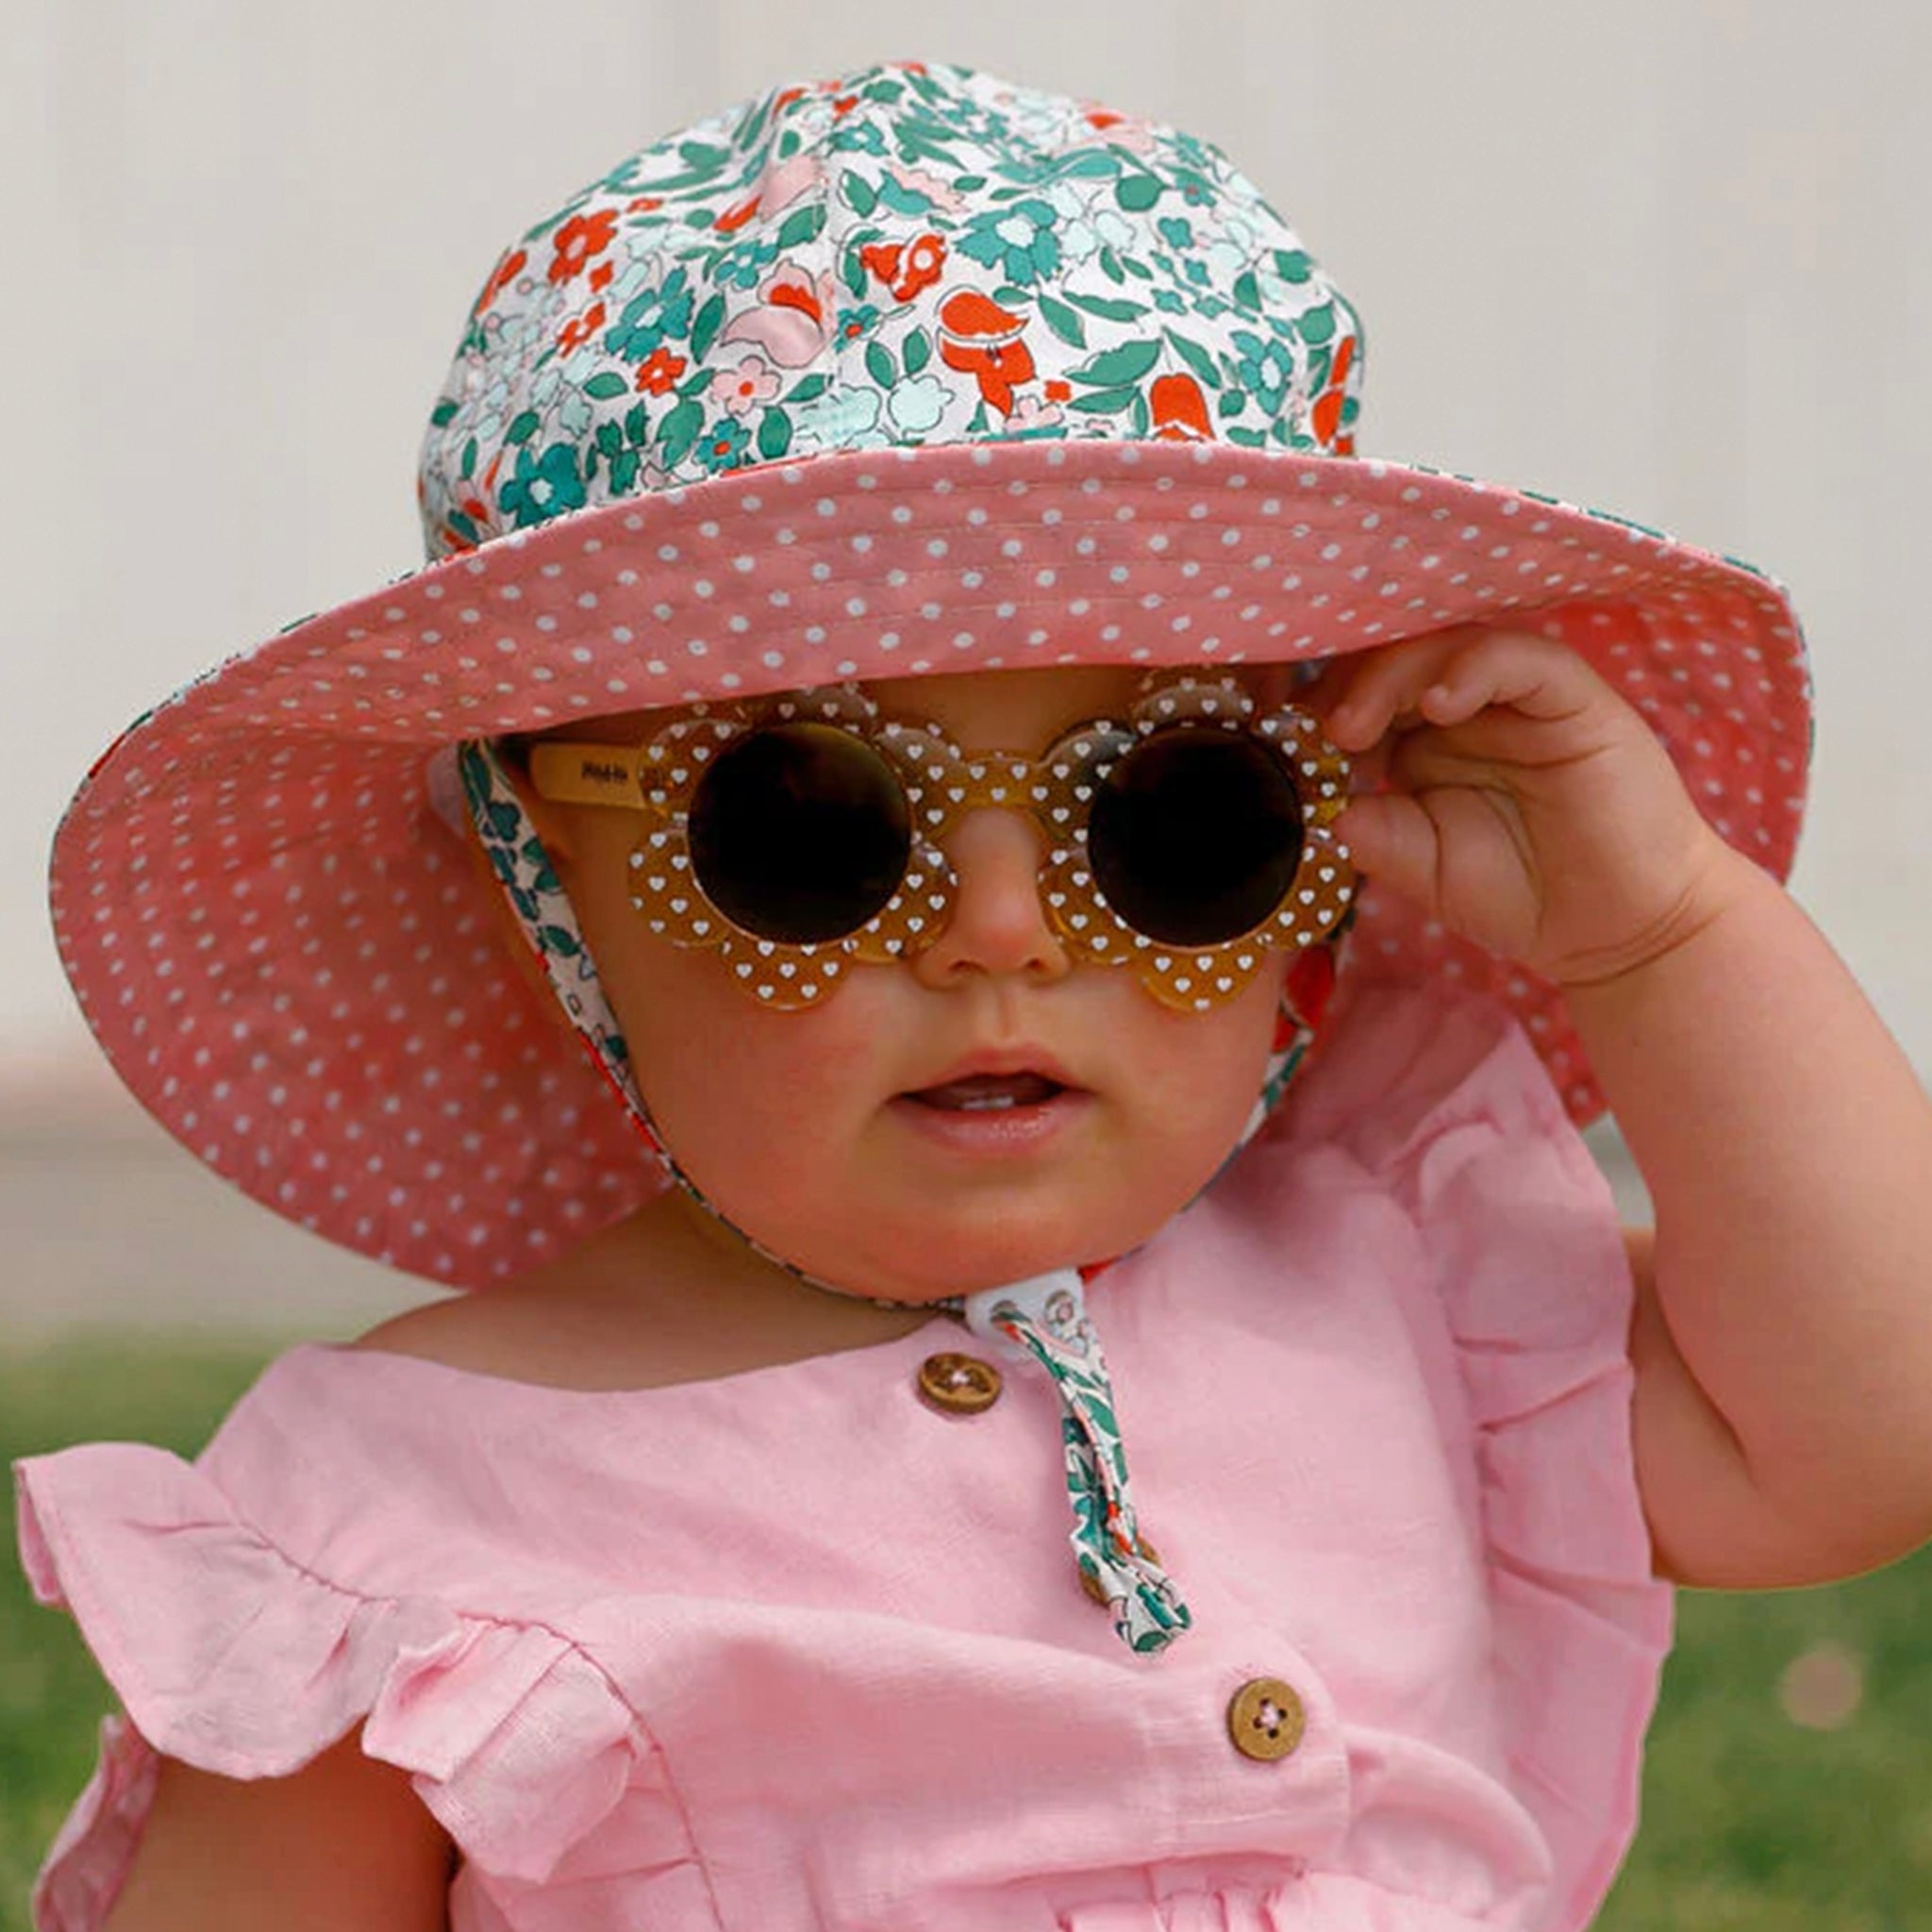 Frankie Ray Kid's Sunglasses Baby Daisy - Crystal Yellow with White Heart